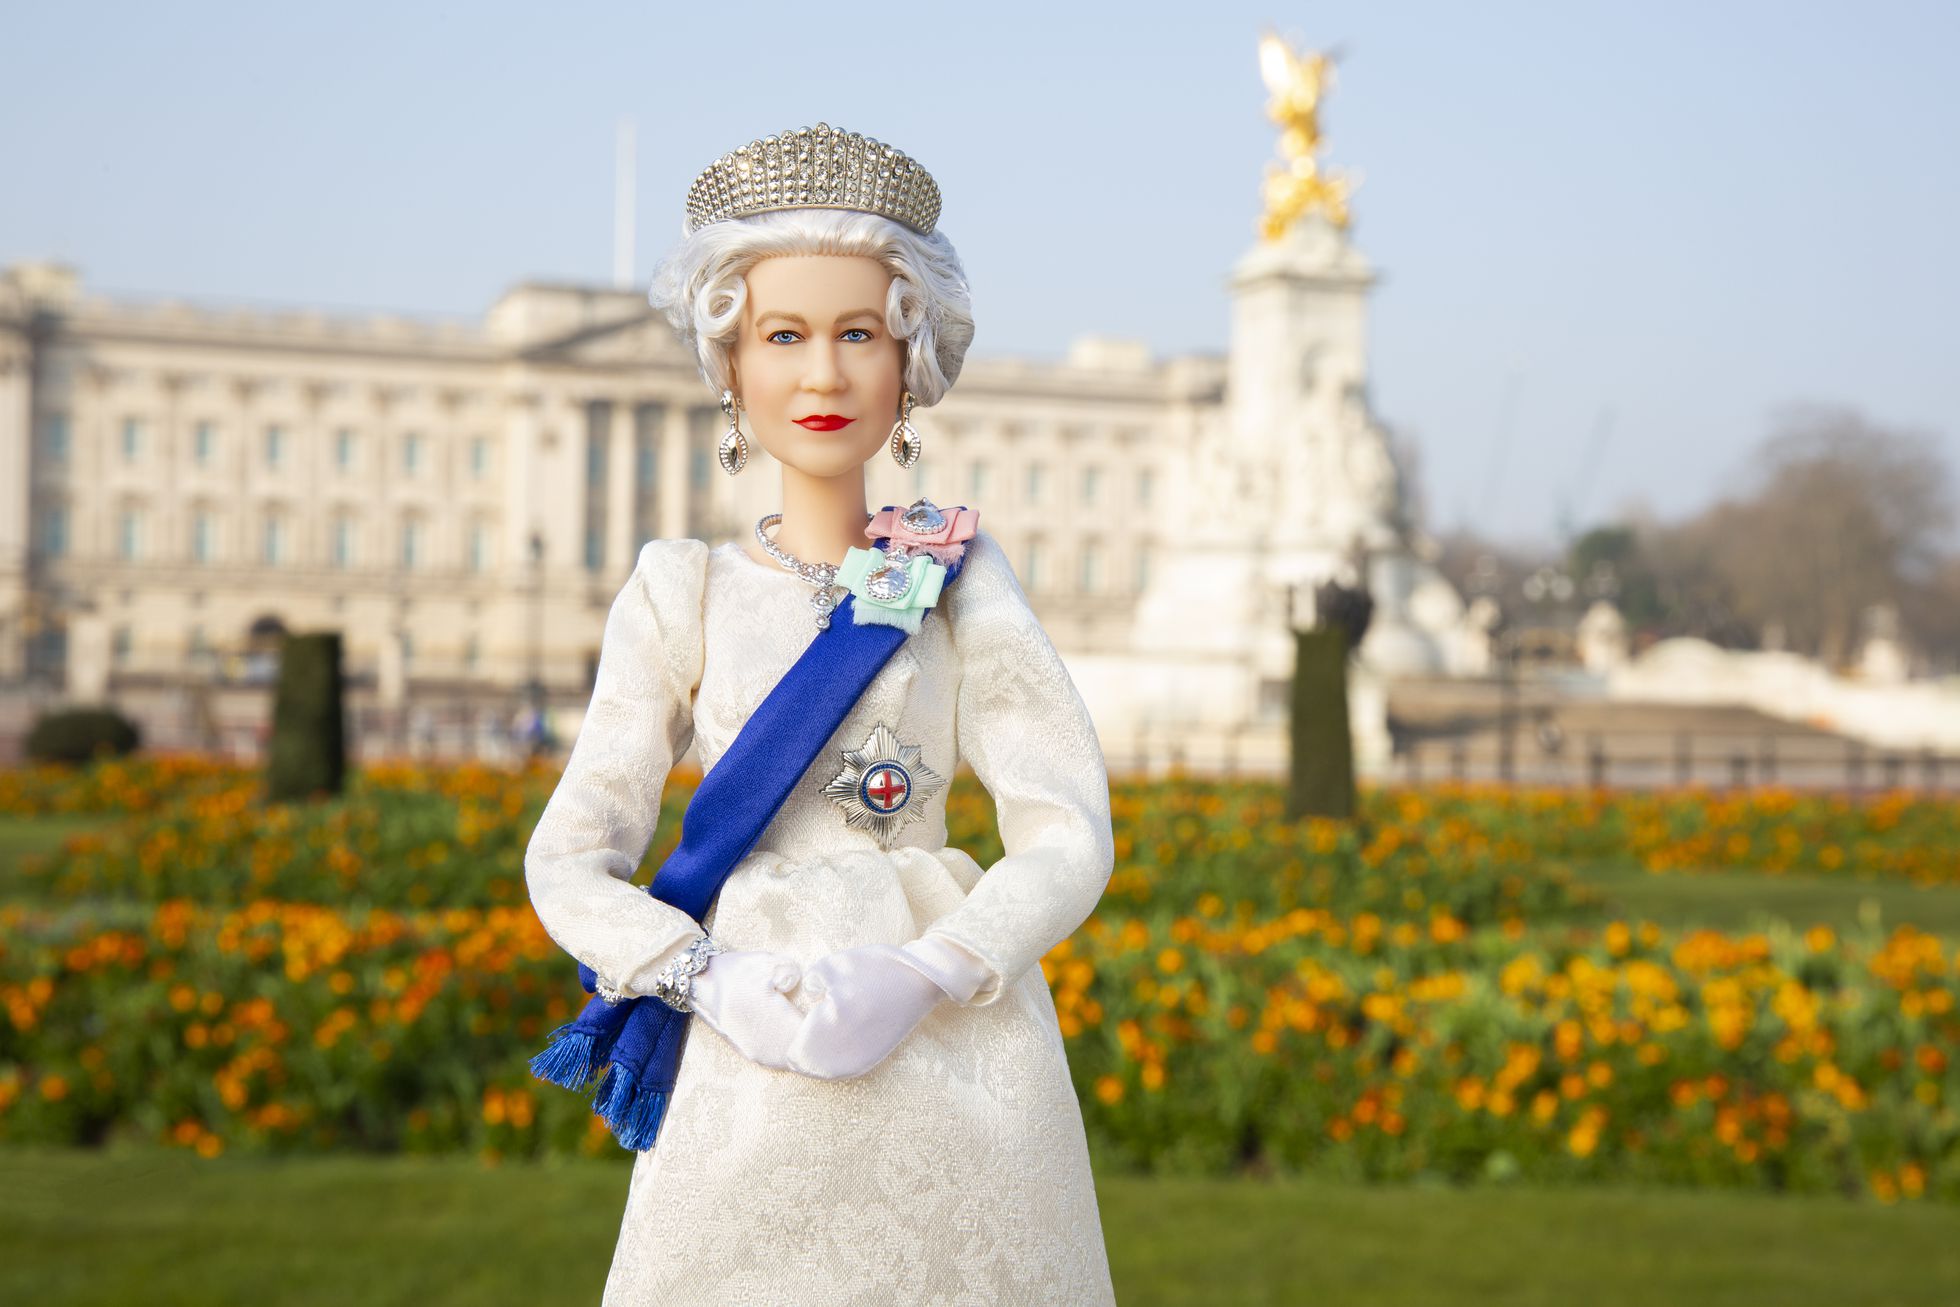 Reina Elizabeth II tiene su propia Barbie para celebrar su Jubileo de Platino